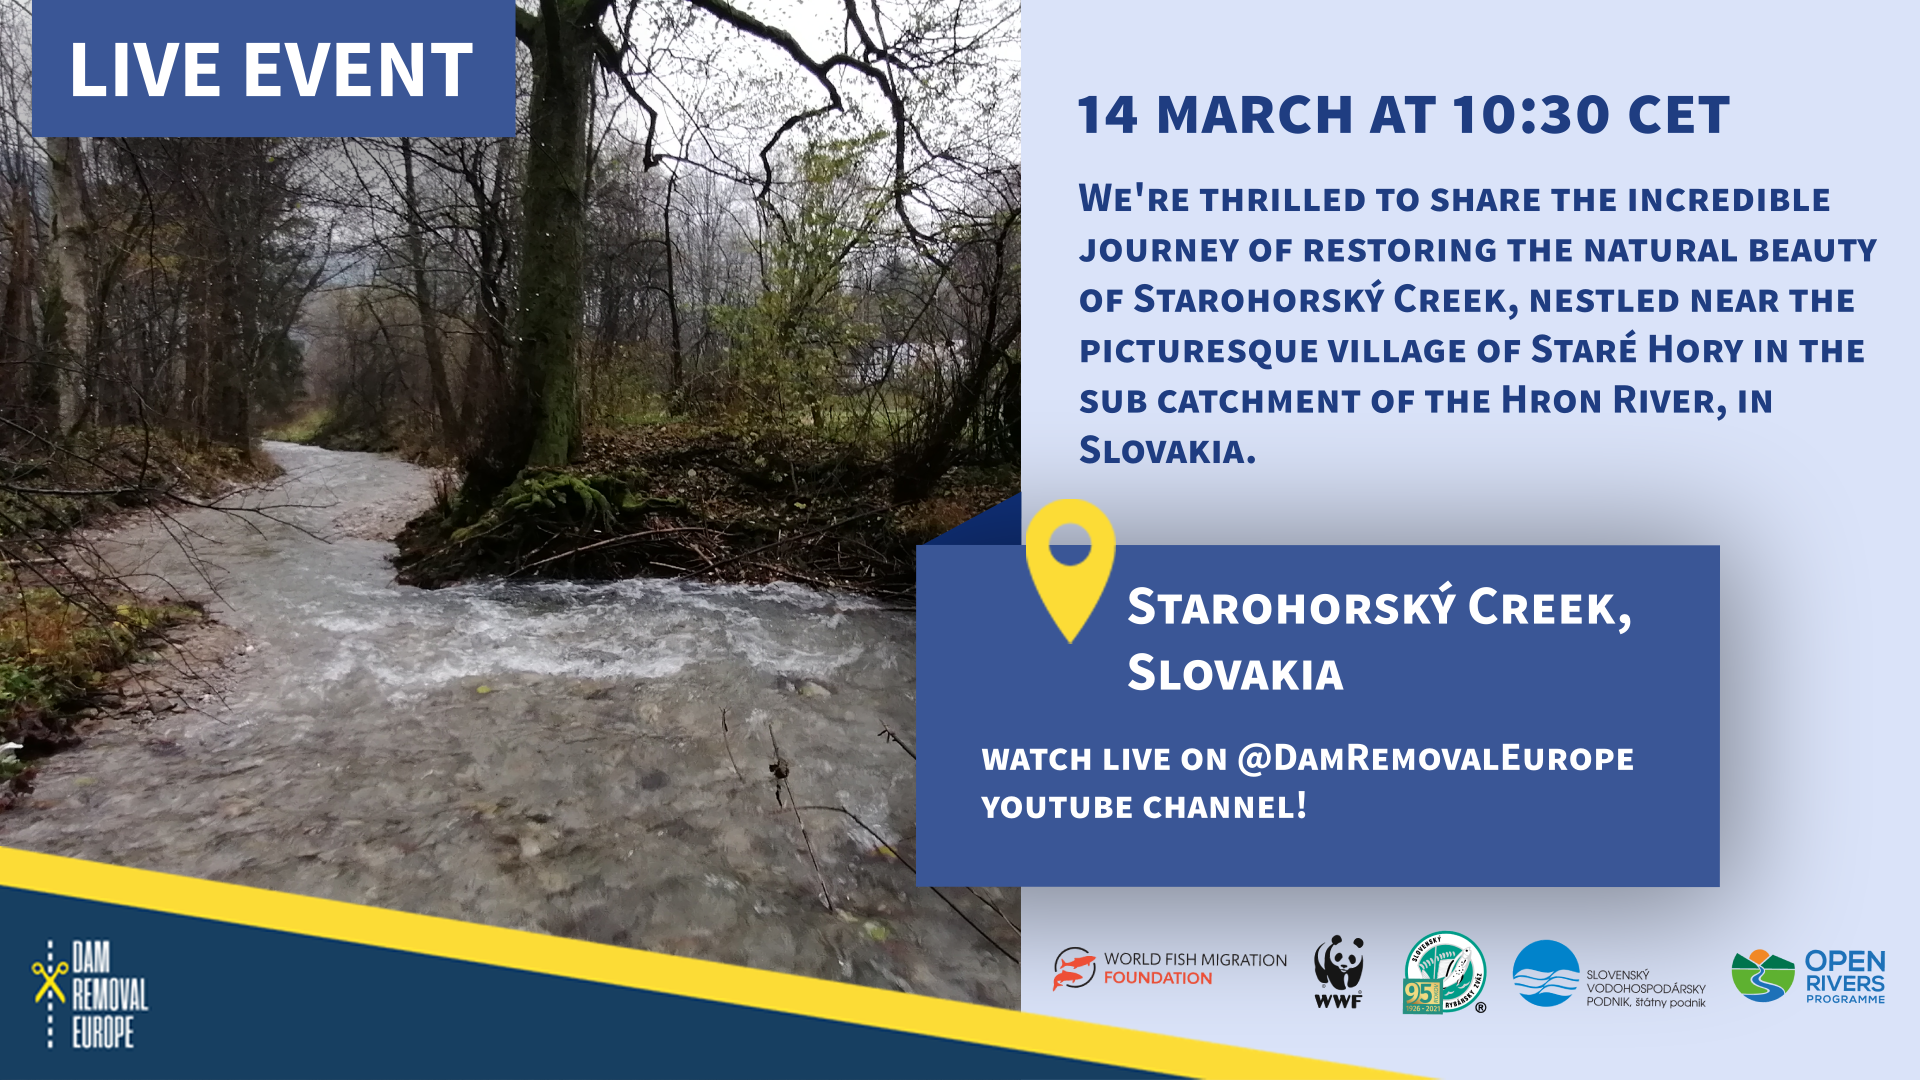 Live from Slovakia! Join us to celebrate a river restoration success on Starohorský Creek